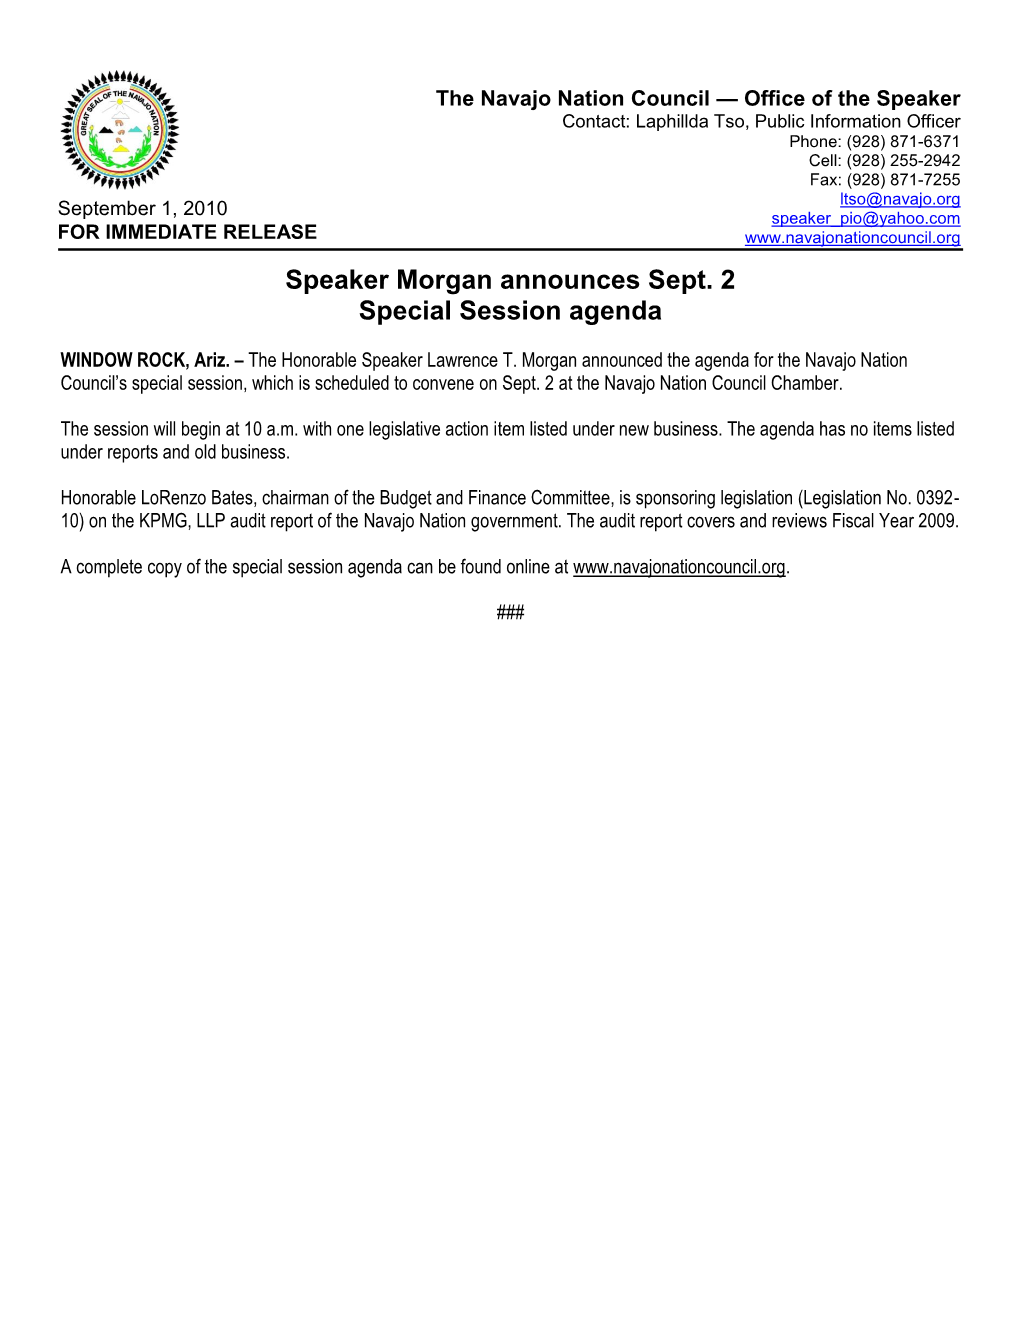 Speaker Morgan Announces Sept. 2 Special Session Agenda